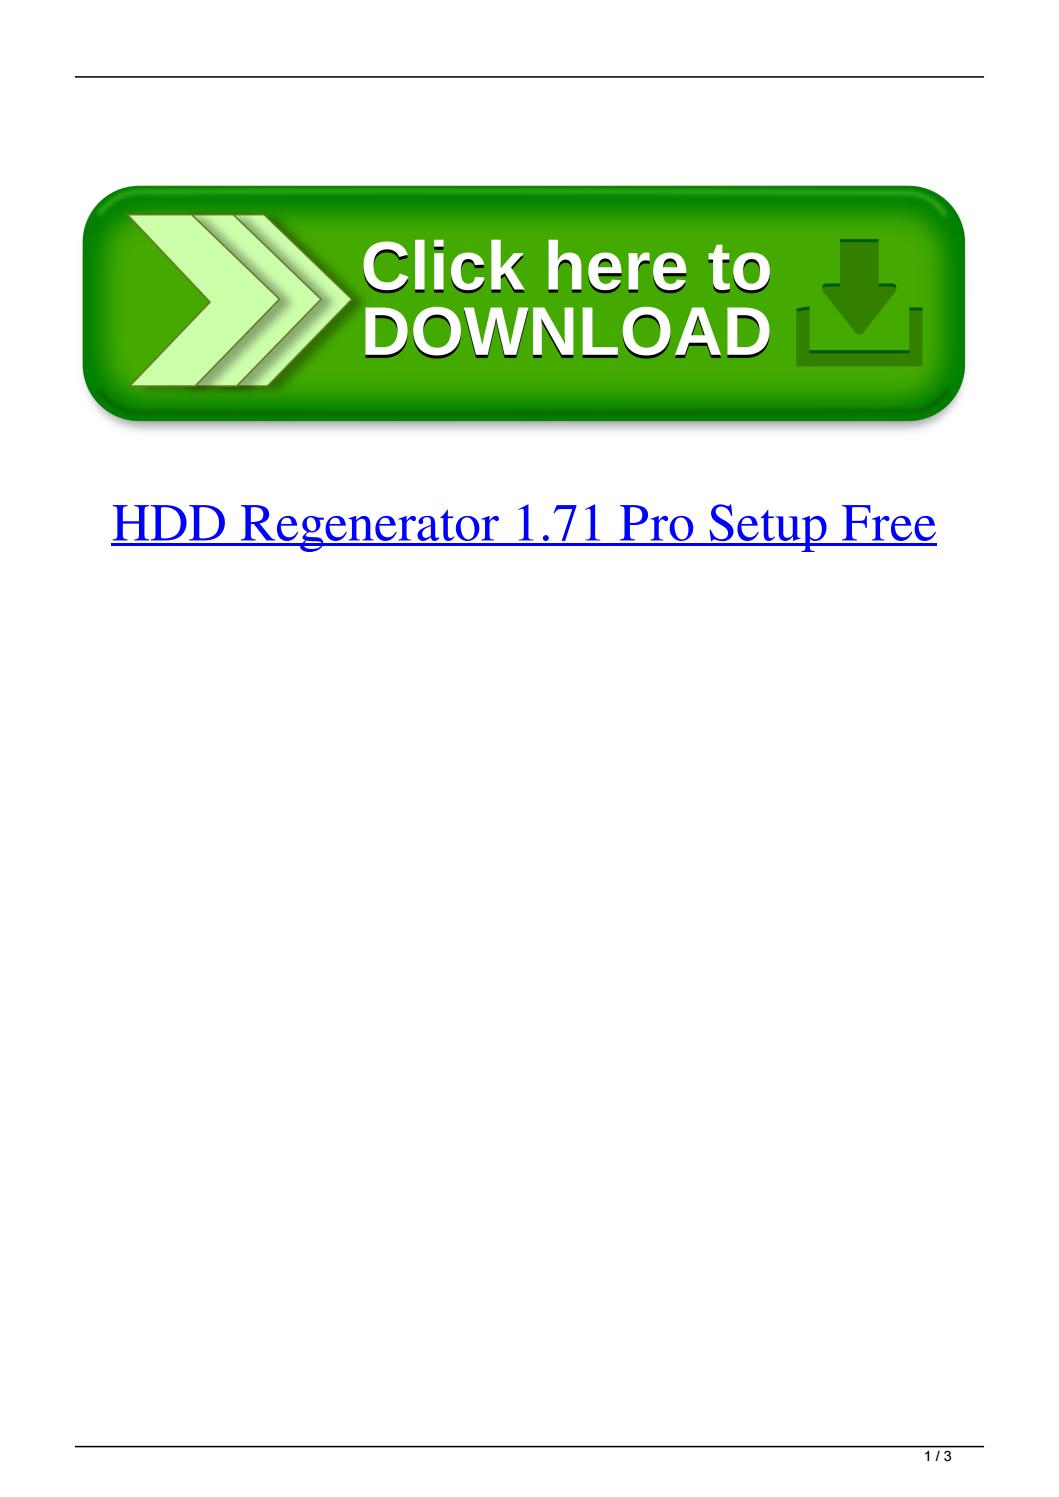 Hdd regenerator 1.71 free